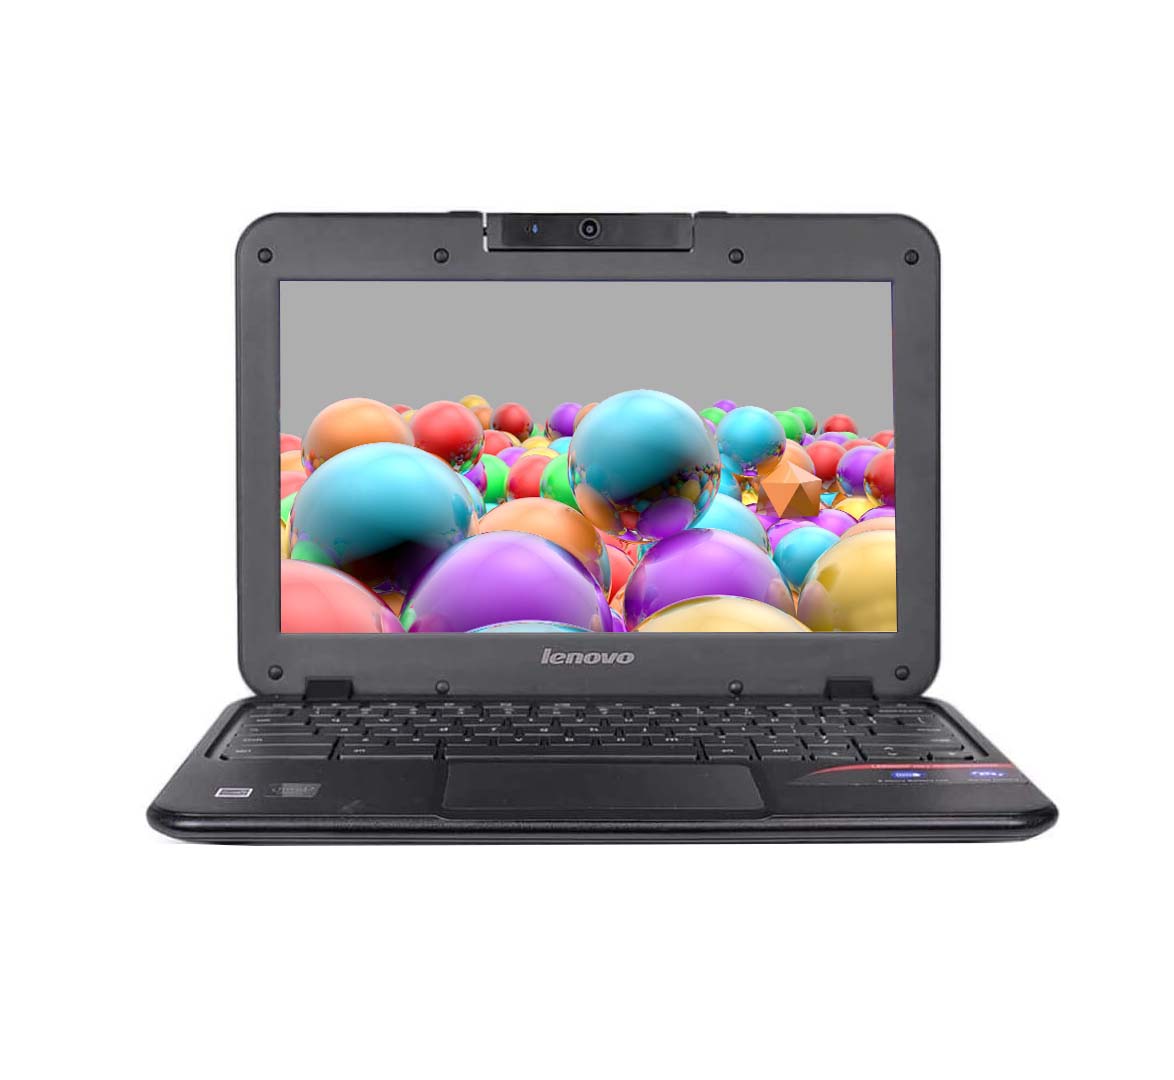 Lenovo Chromebook N21 Notebook Laptop, Intel Celeron N Series CPU, 4GB RAM, 256GB SSD, 11.6 inch Display, Chrome OS, Refurbished Laptop